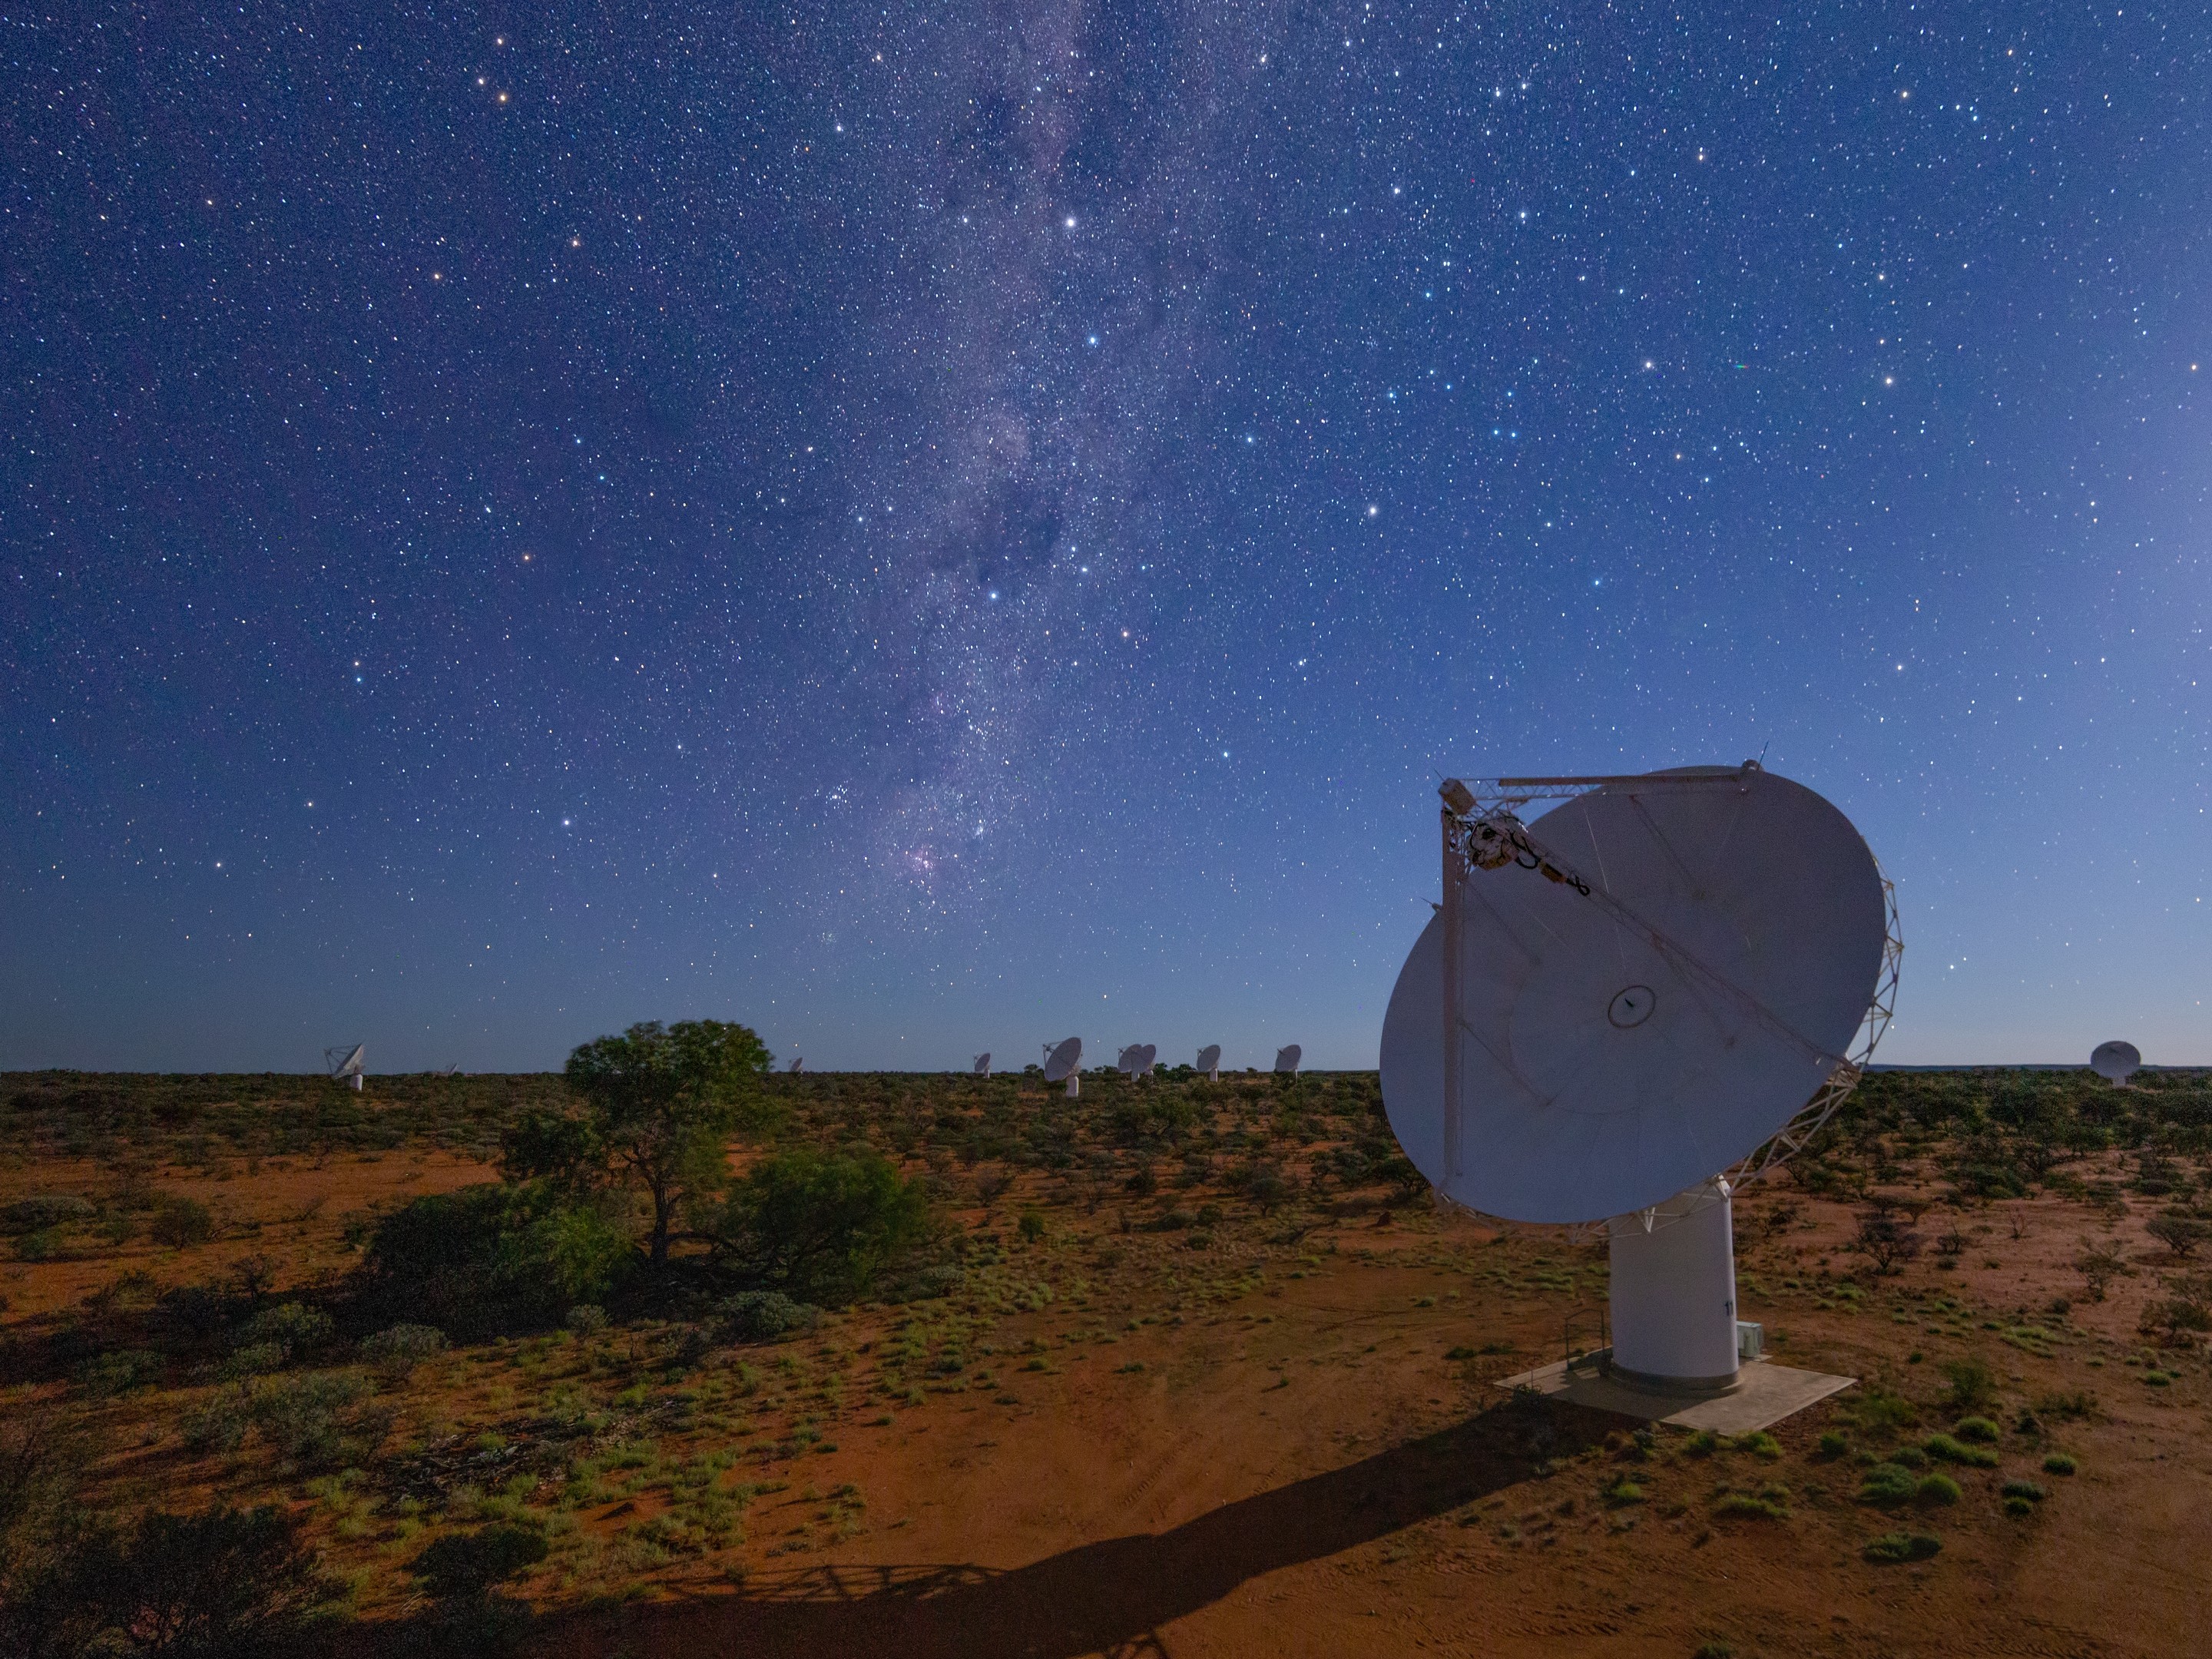 O radiotelescópio ASKAP no Observatório de Radioastronomia Murchison na Austrália Ocidental. (Foto: Alex Cherney/CSIRO)